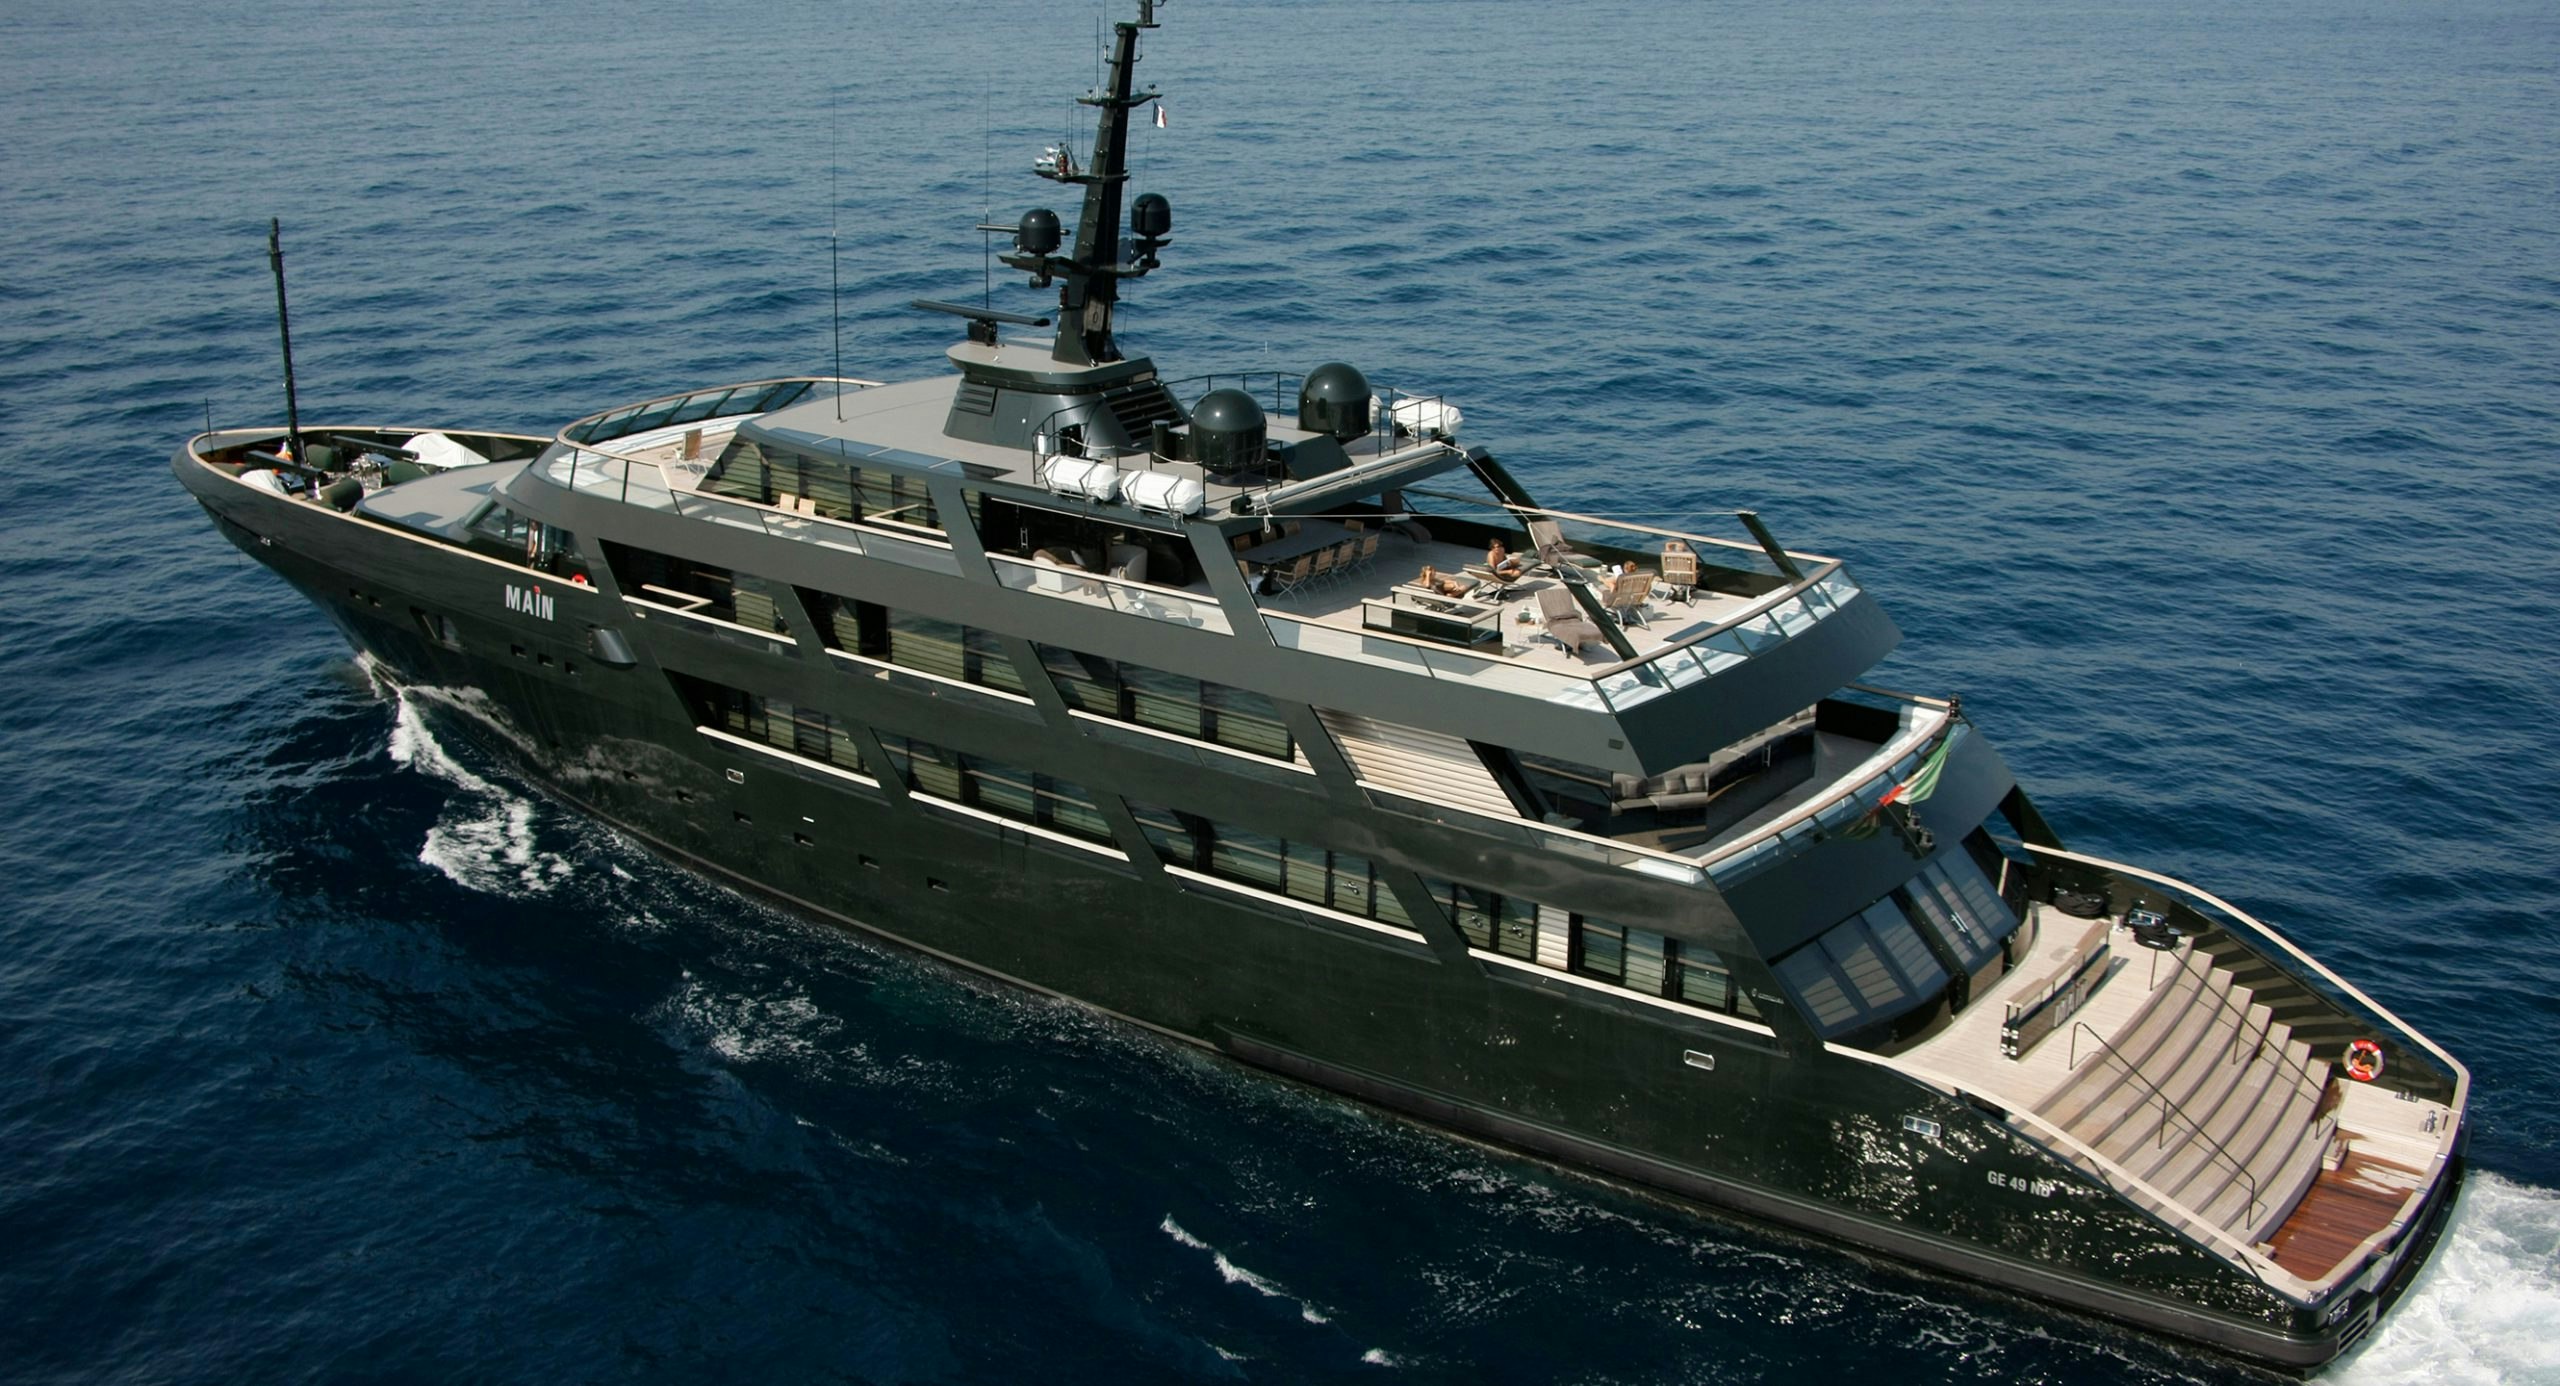 Superyacht Codecasa Main by designer Giorgio Armani